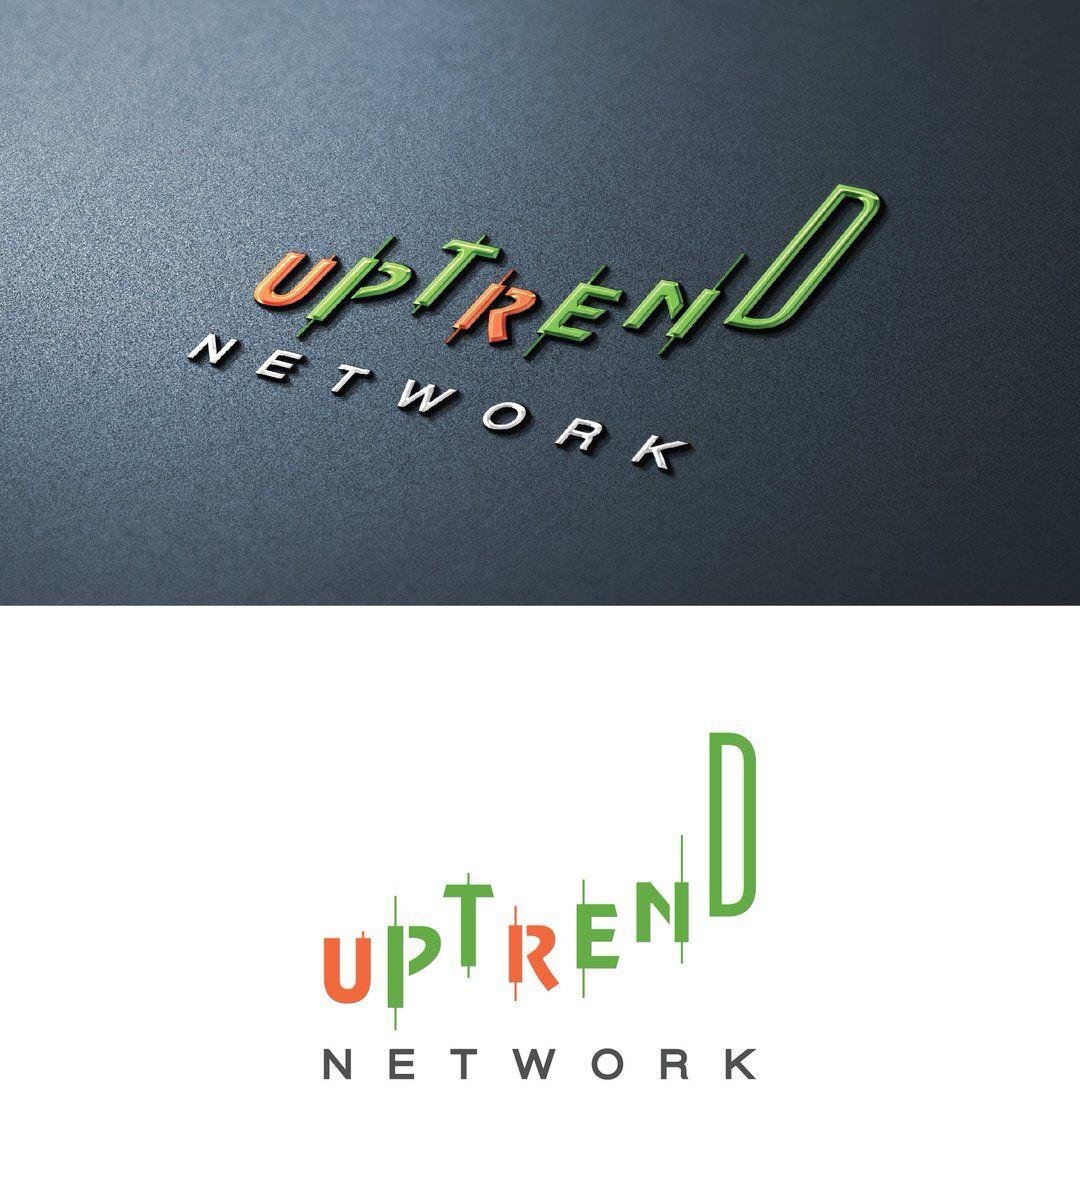 Uptrend Logo - Uptrend Network on Twitter: 